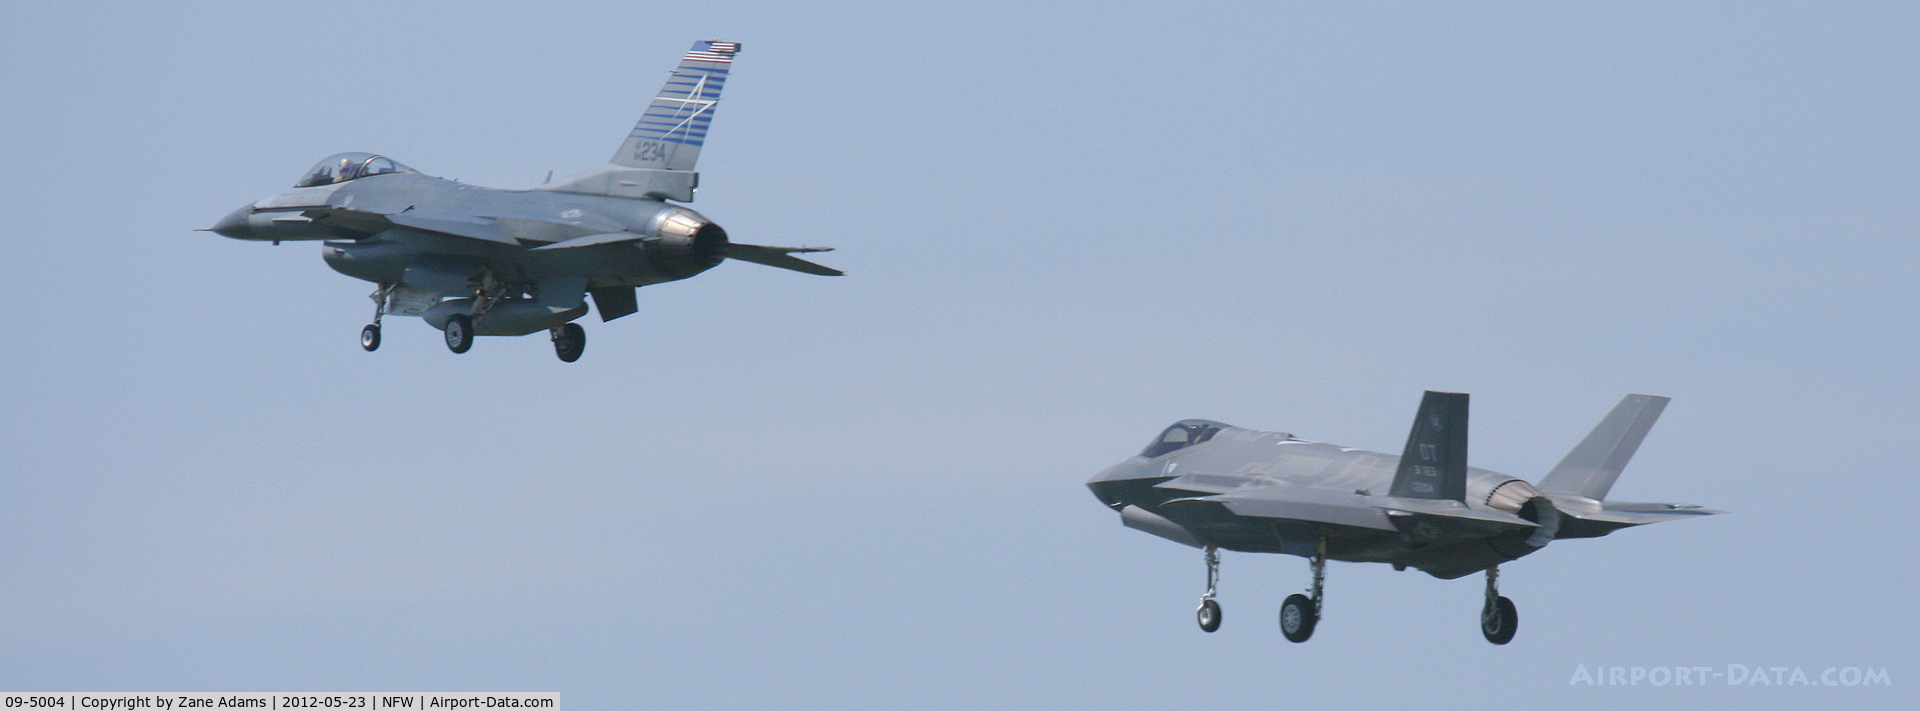 09-5004, 2009 Lockheed Martin F-35A Lightning II C/N AF-17, Lockheed F-35A (AF-17) landing at NASJRB Fort Worth